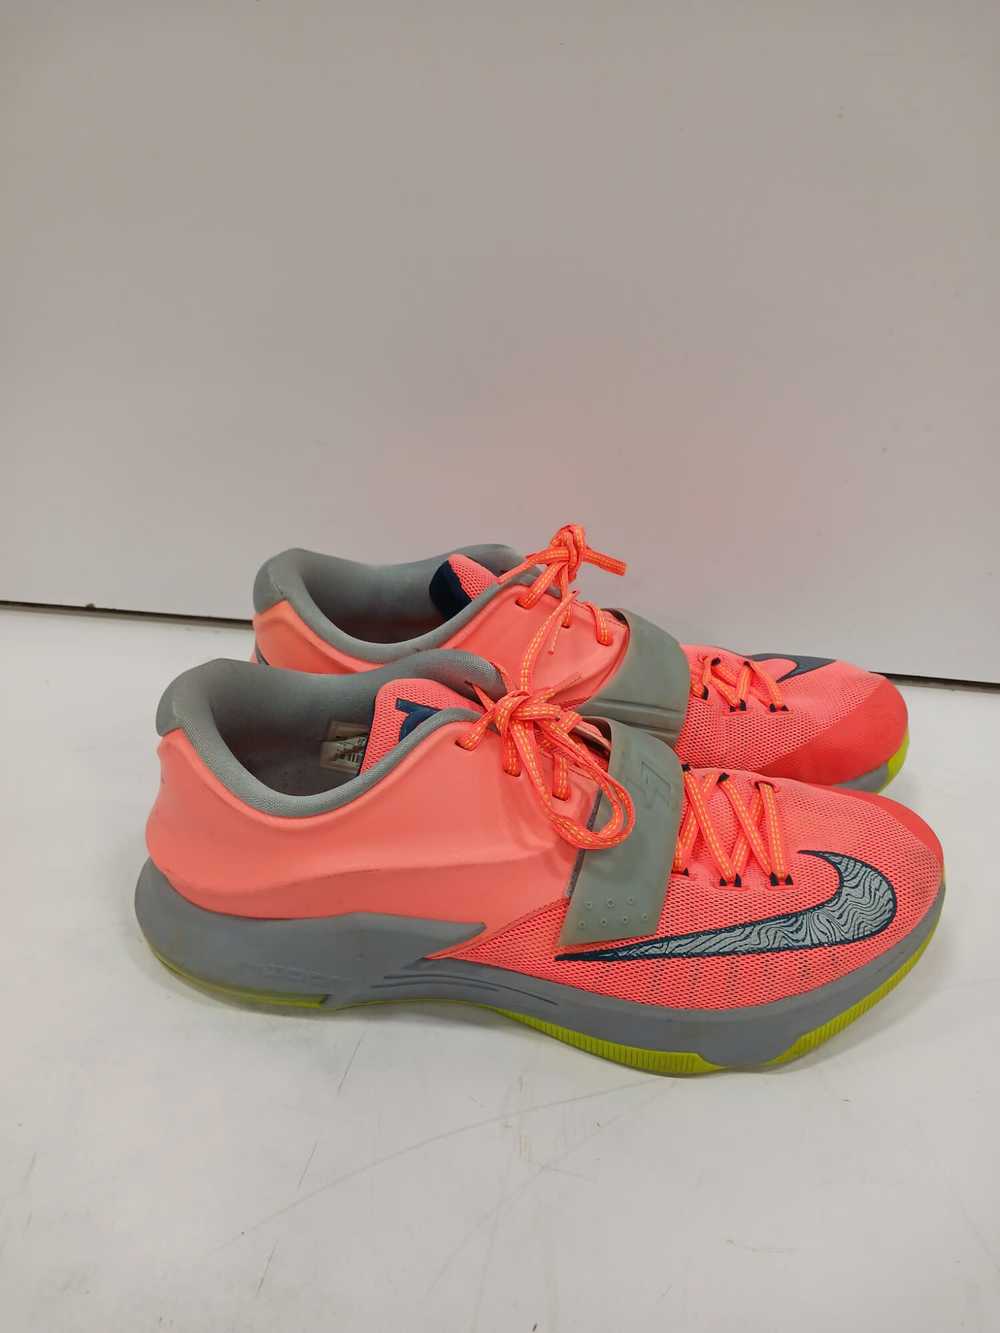 Men's Nike KD 7 Sneakers Sz 13 - image 2